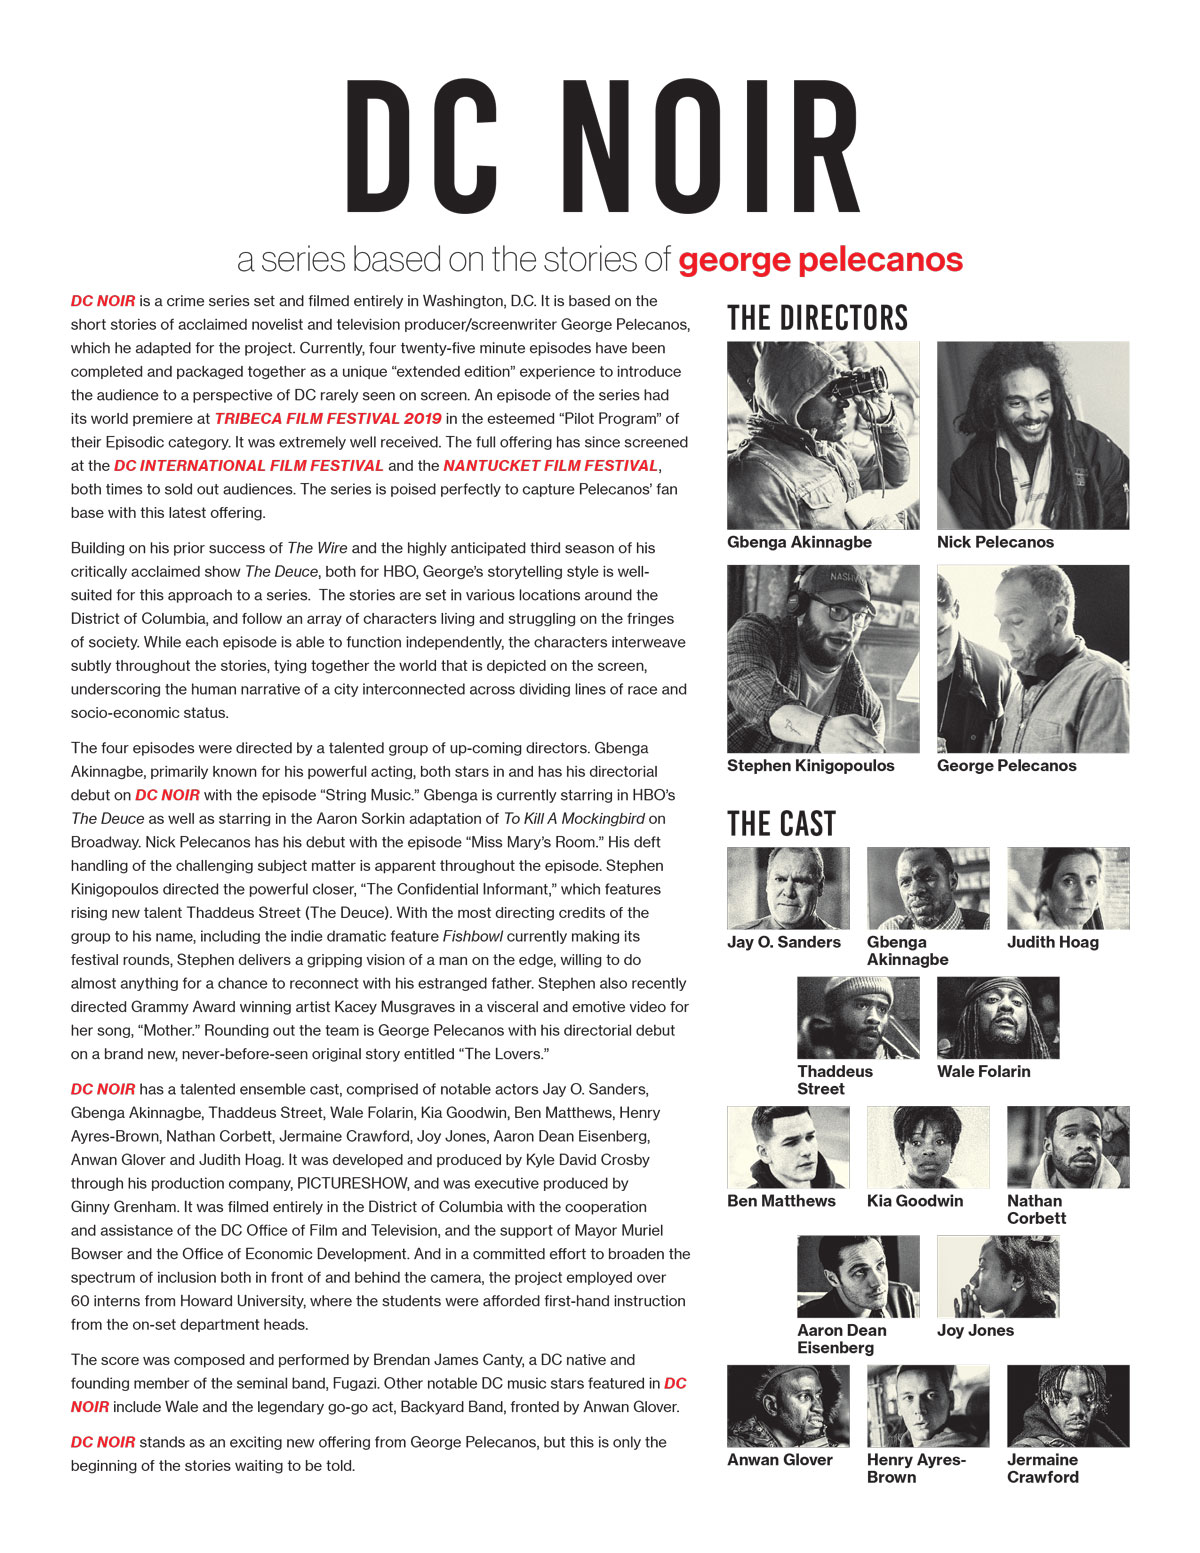 DC Noir Press Release